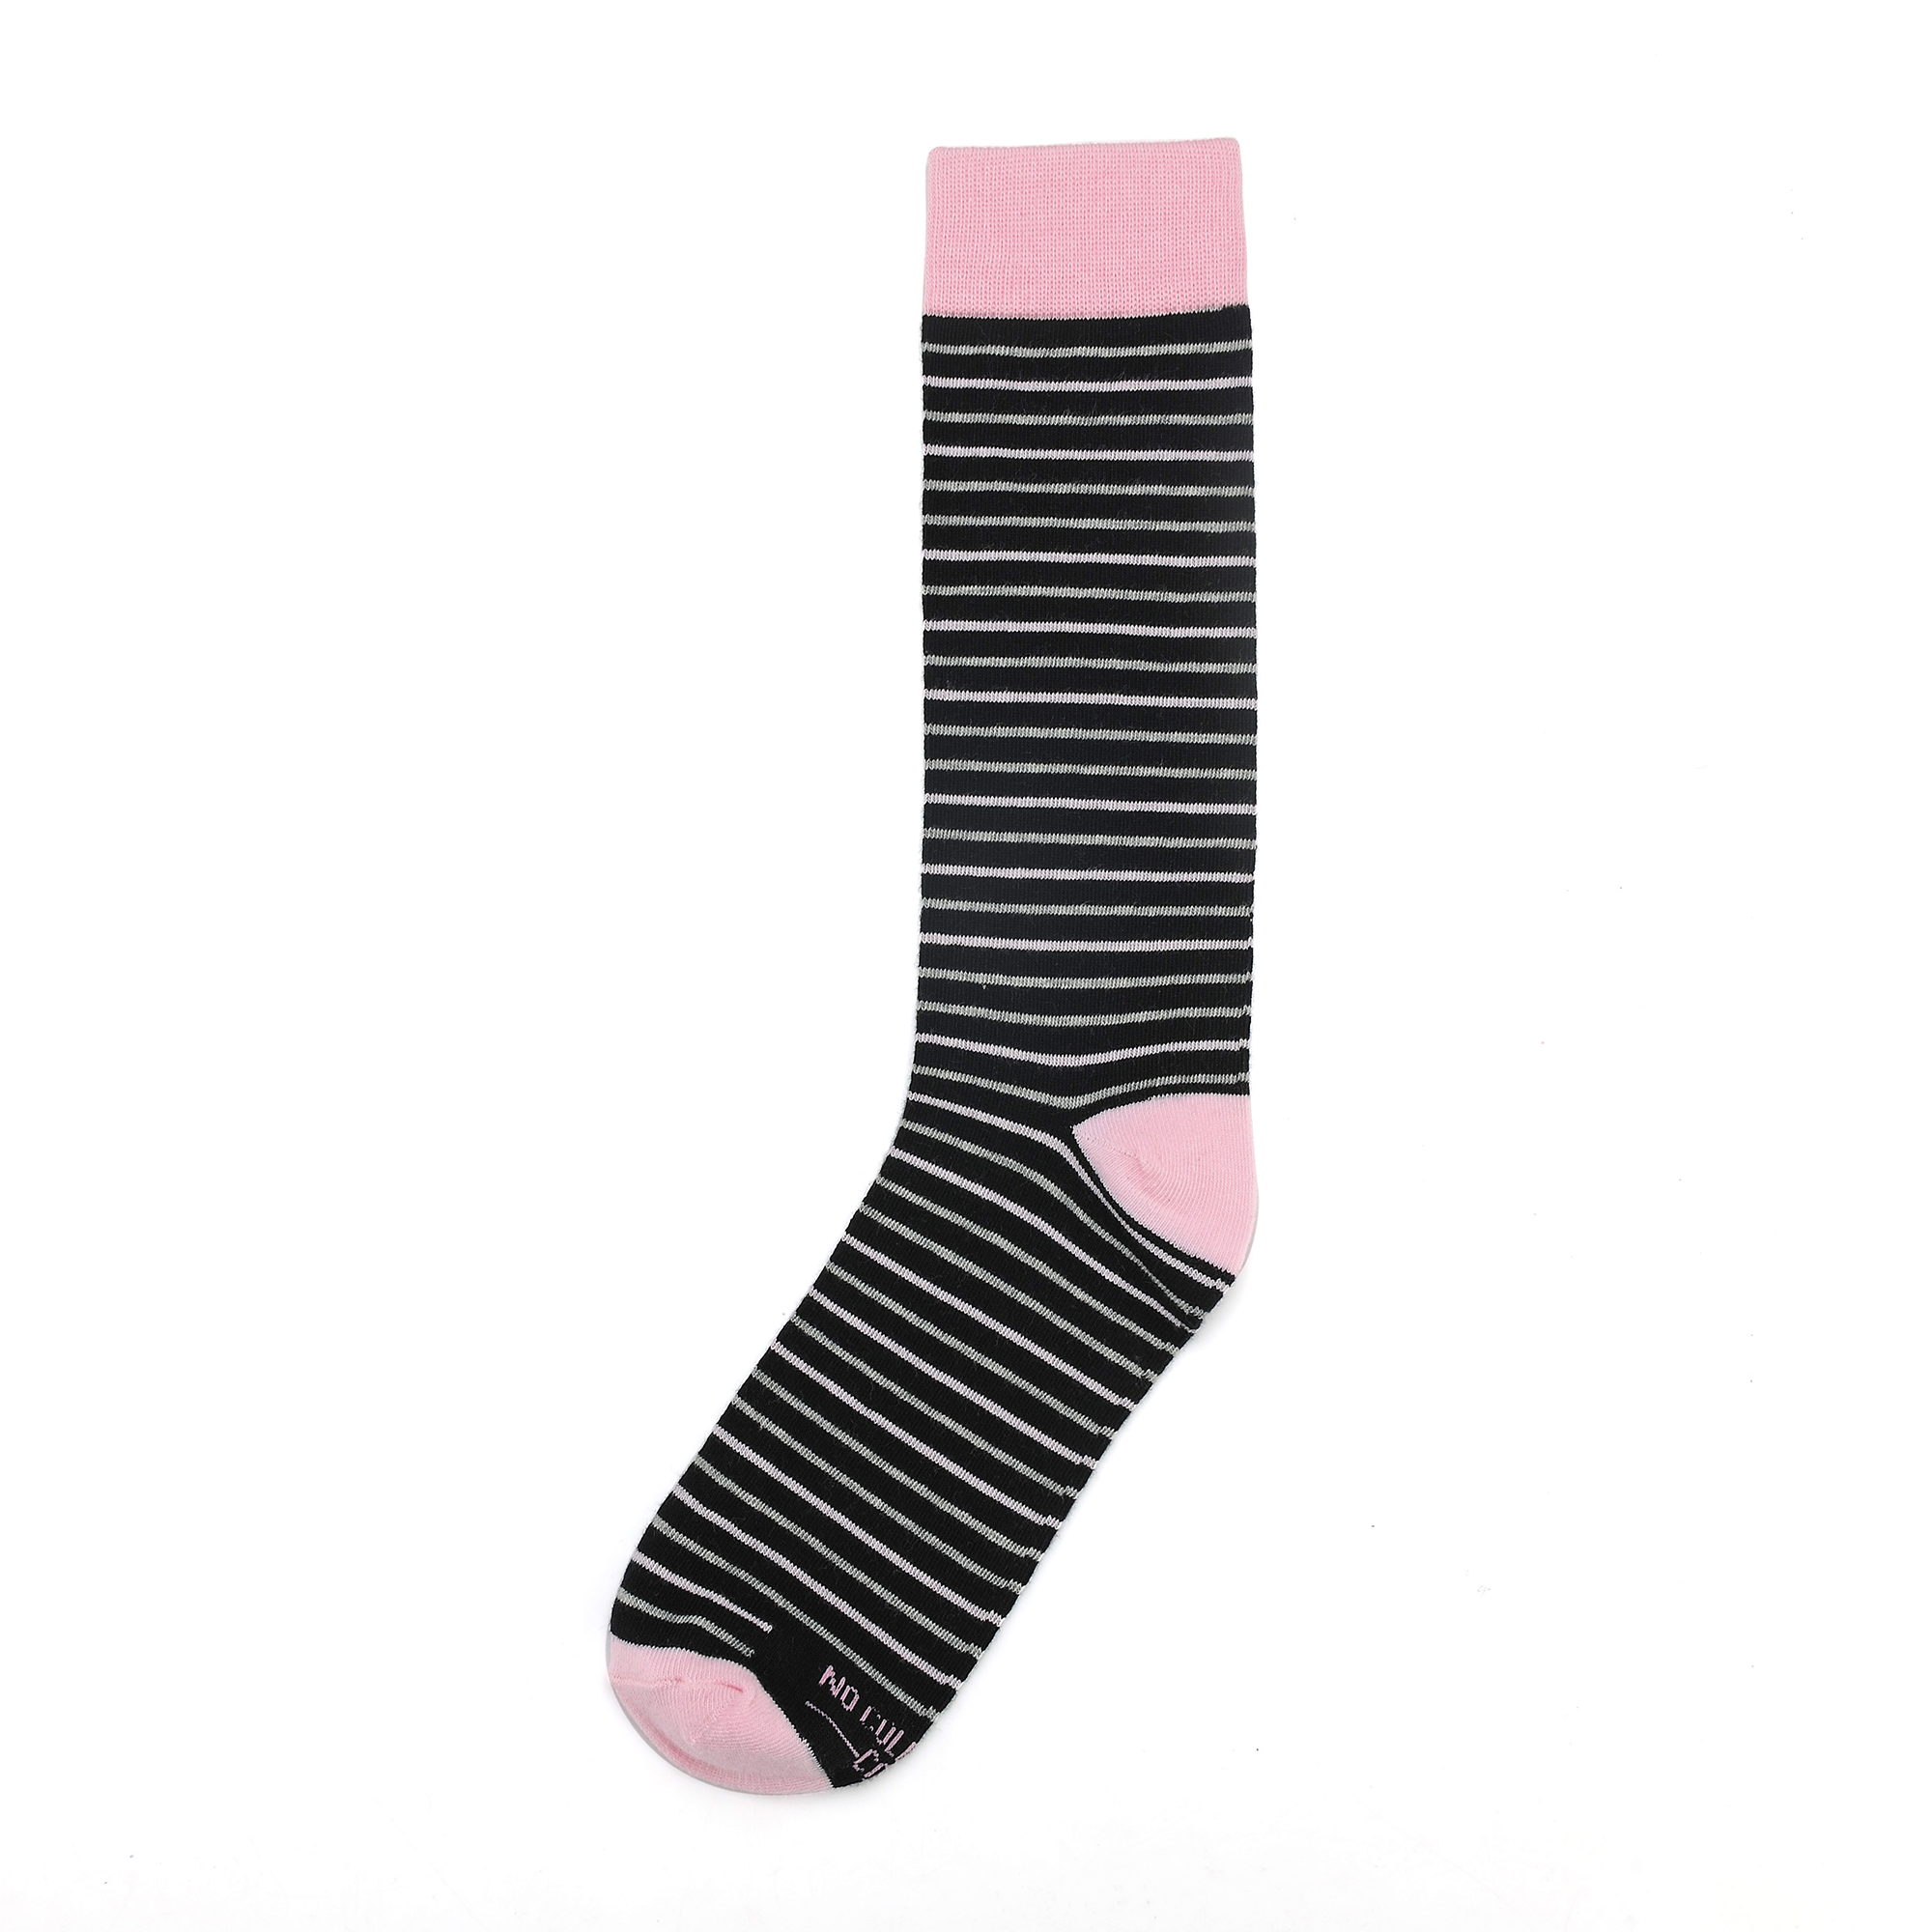 Black, Pink and Grey Striped Socks